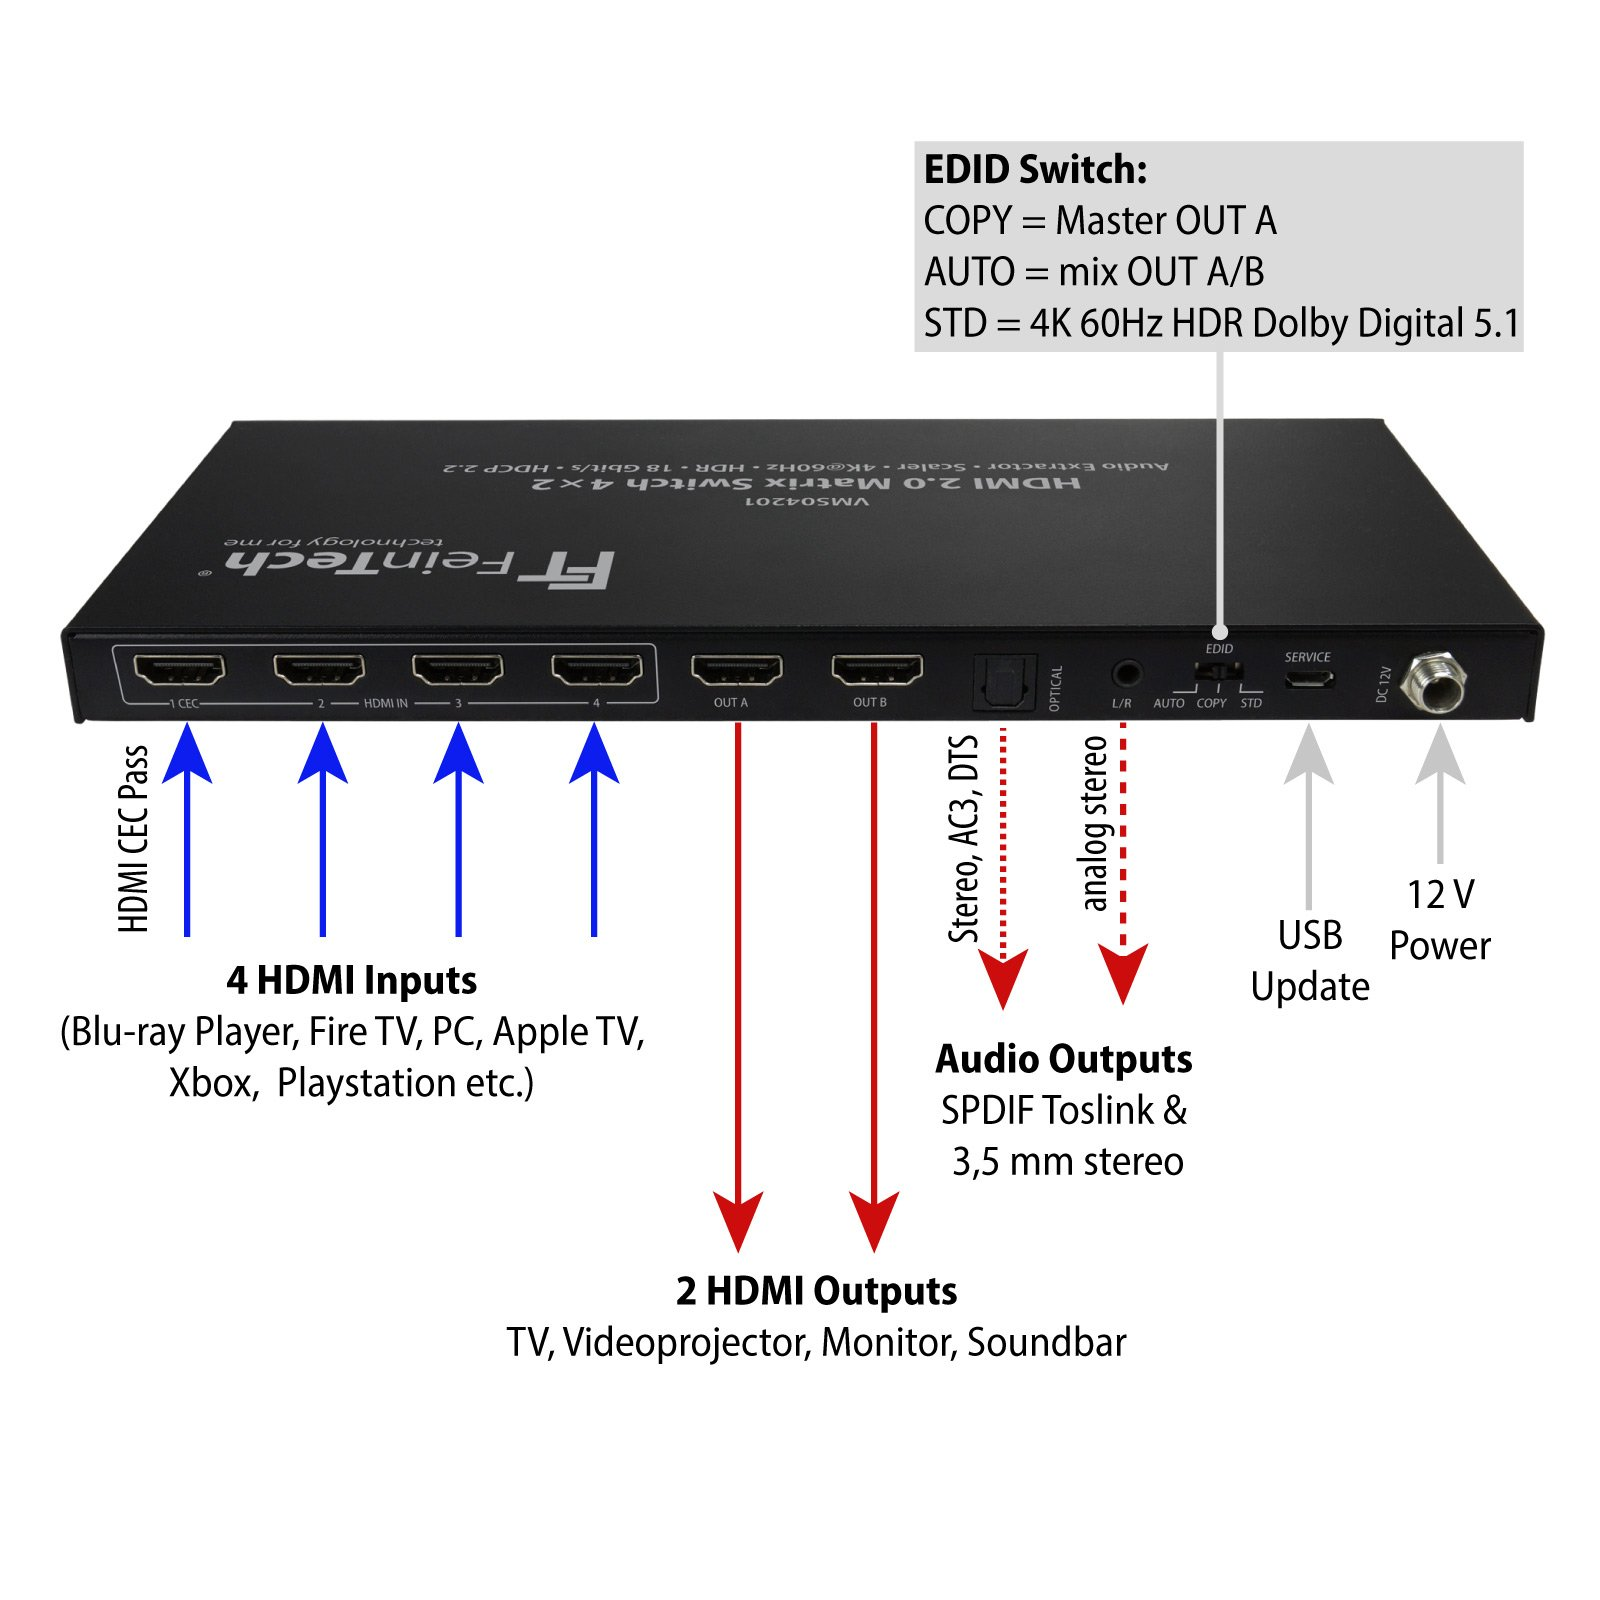 FEINTECH VMS04201 HDMI 2.0 Matrix Splitter Extractor, Switch Downscaler HDMI ARC, Audio Switch mit 4x2 